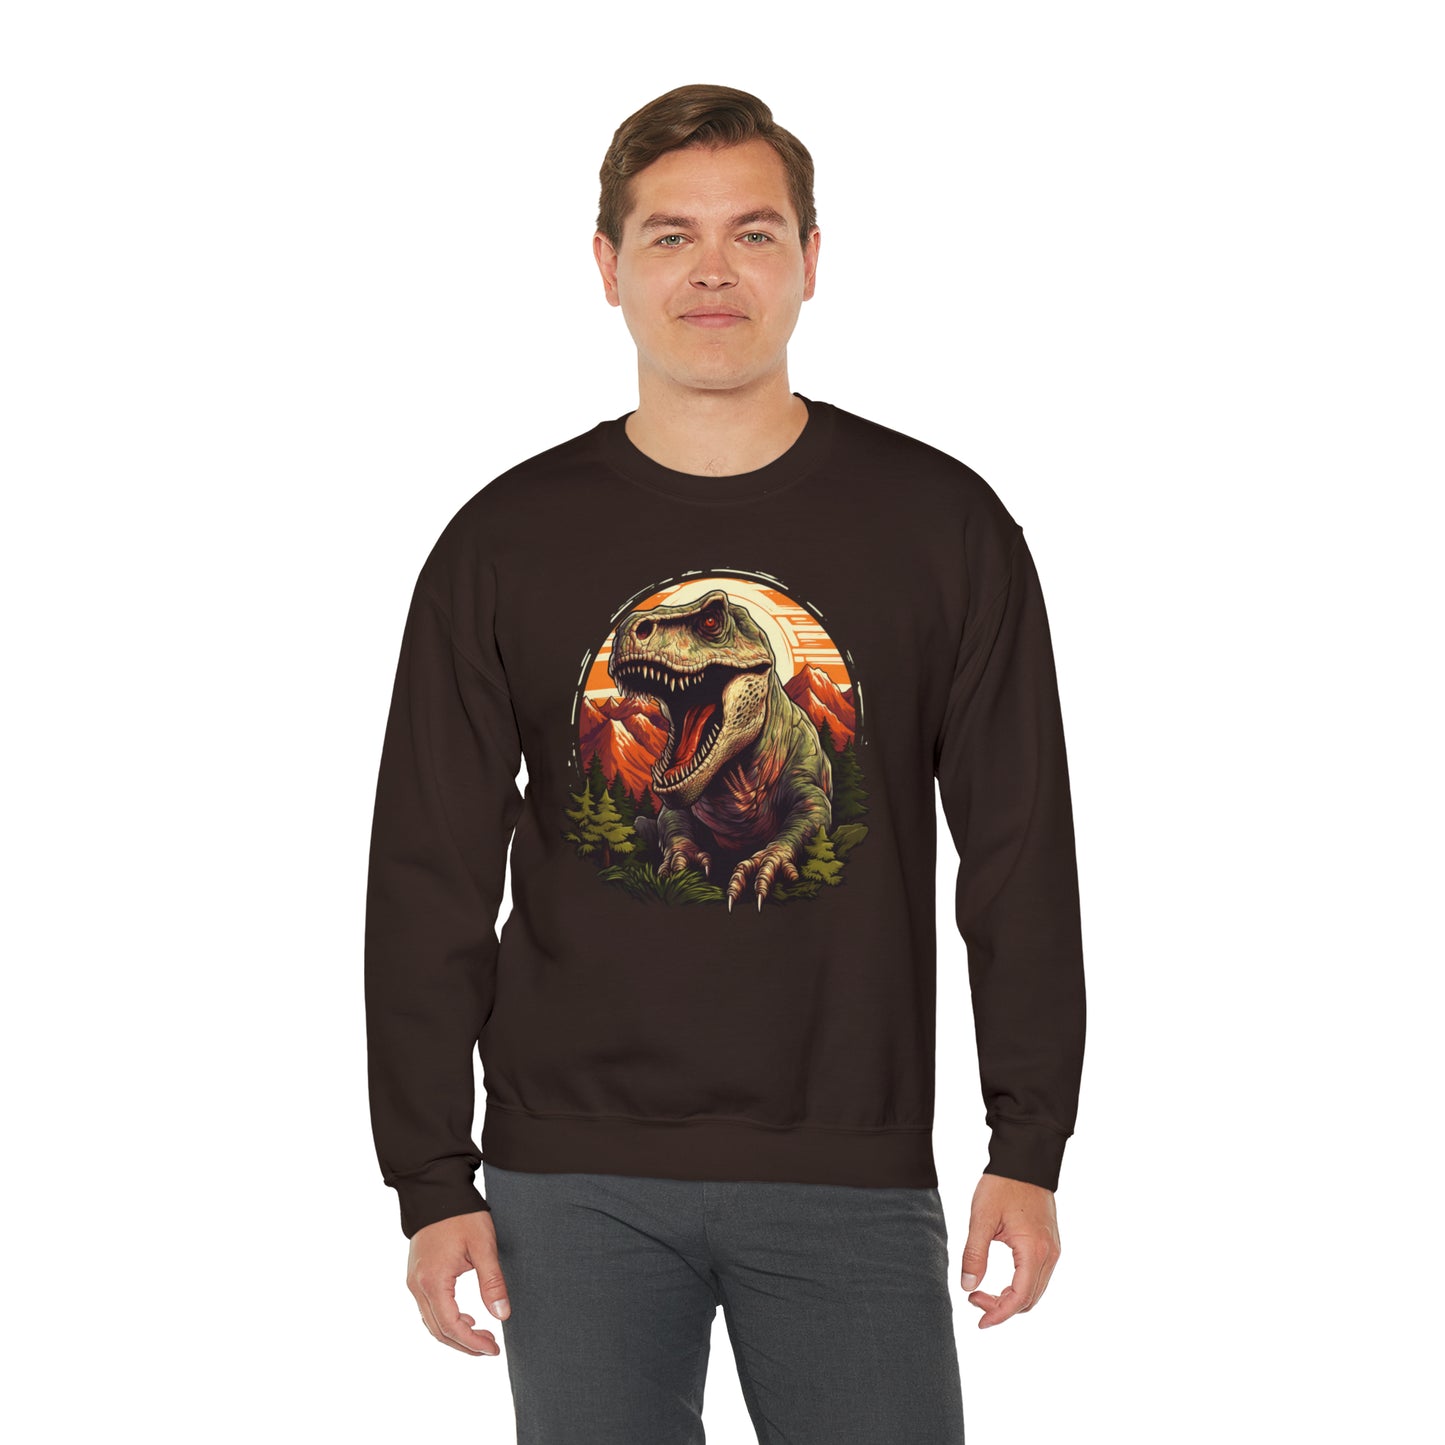 Dinosaur Sweatshirt, Dino T-Rex Graphic Crewneck Fleece Cotton Sweater Jumper Pullover Men Women Adult Aesthetic Designer Top Starcove Fashion